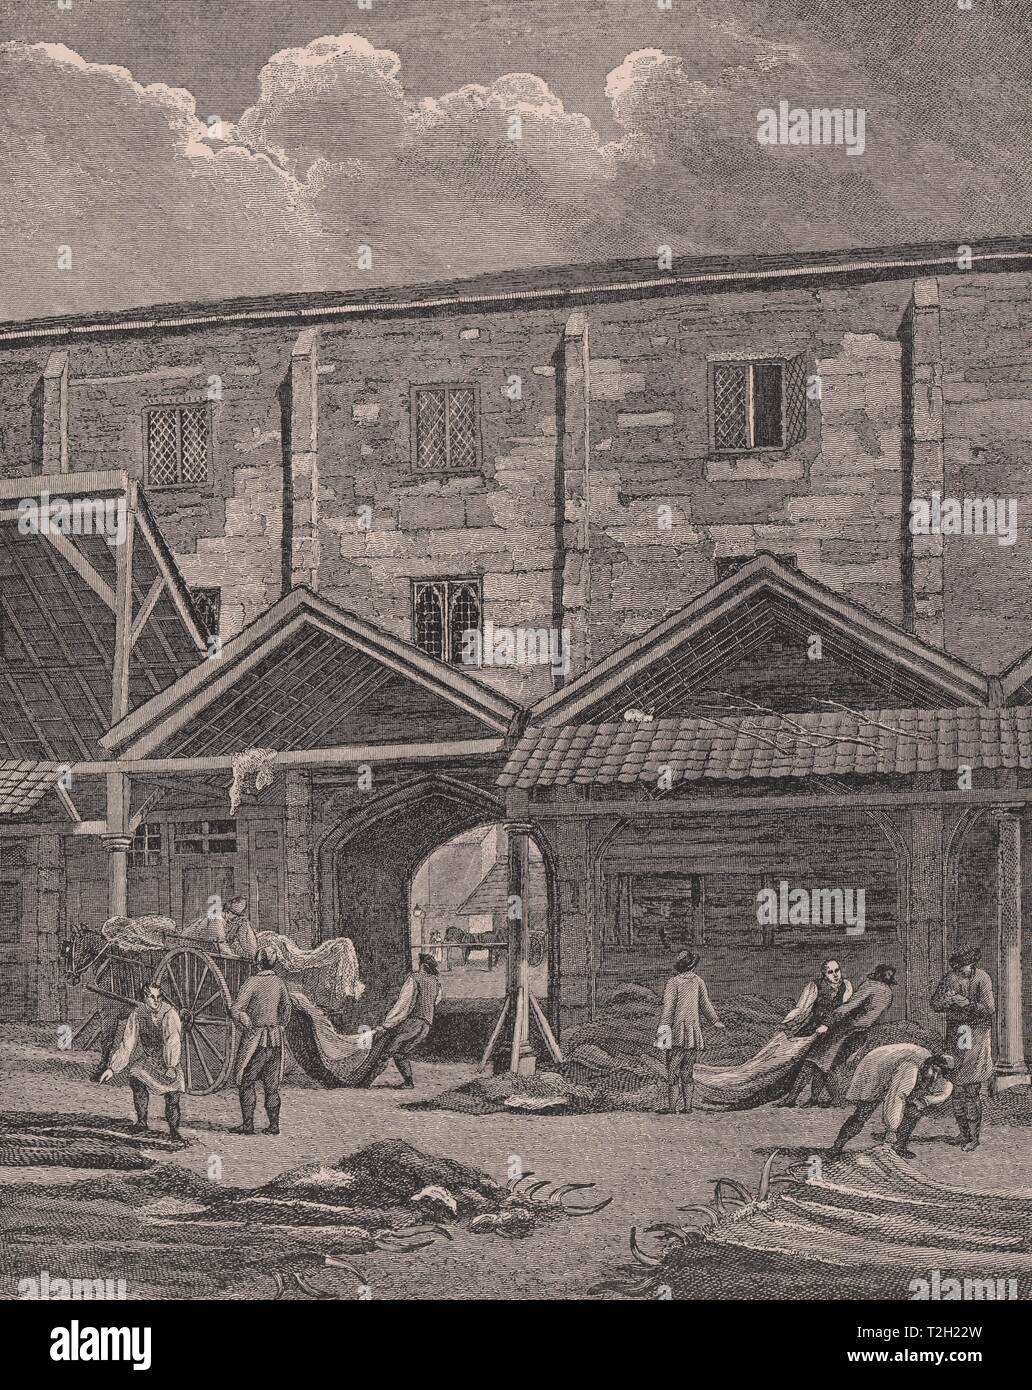 Pelle, mercato Leadenhall, 1825 Foto Stock